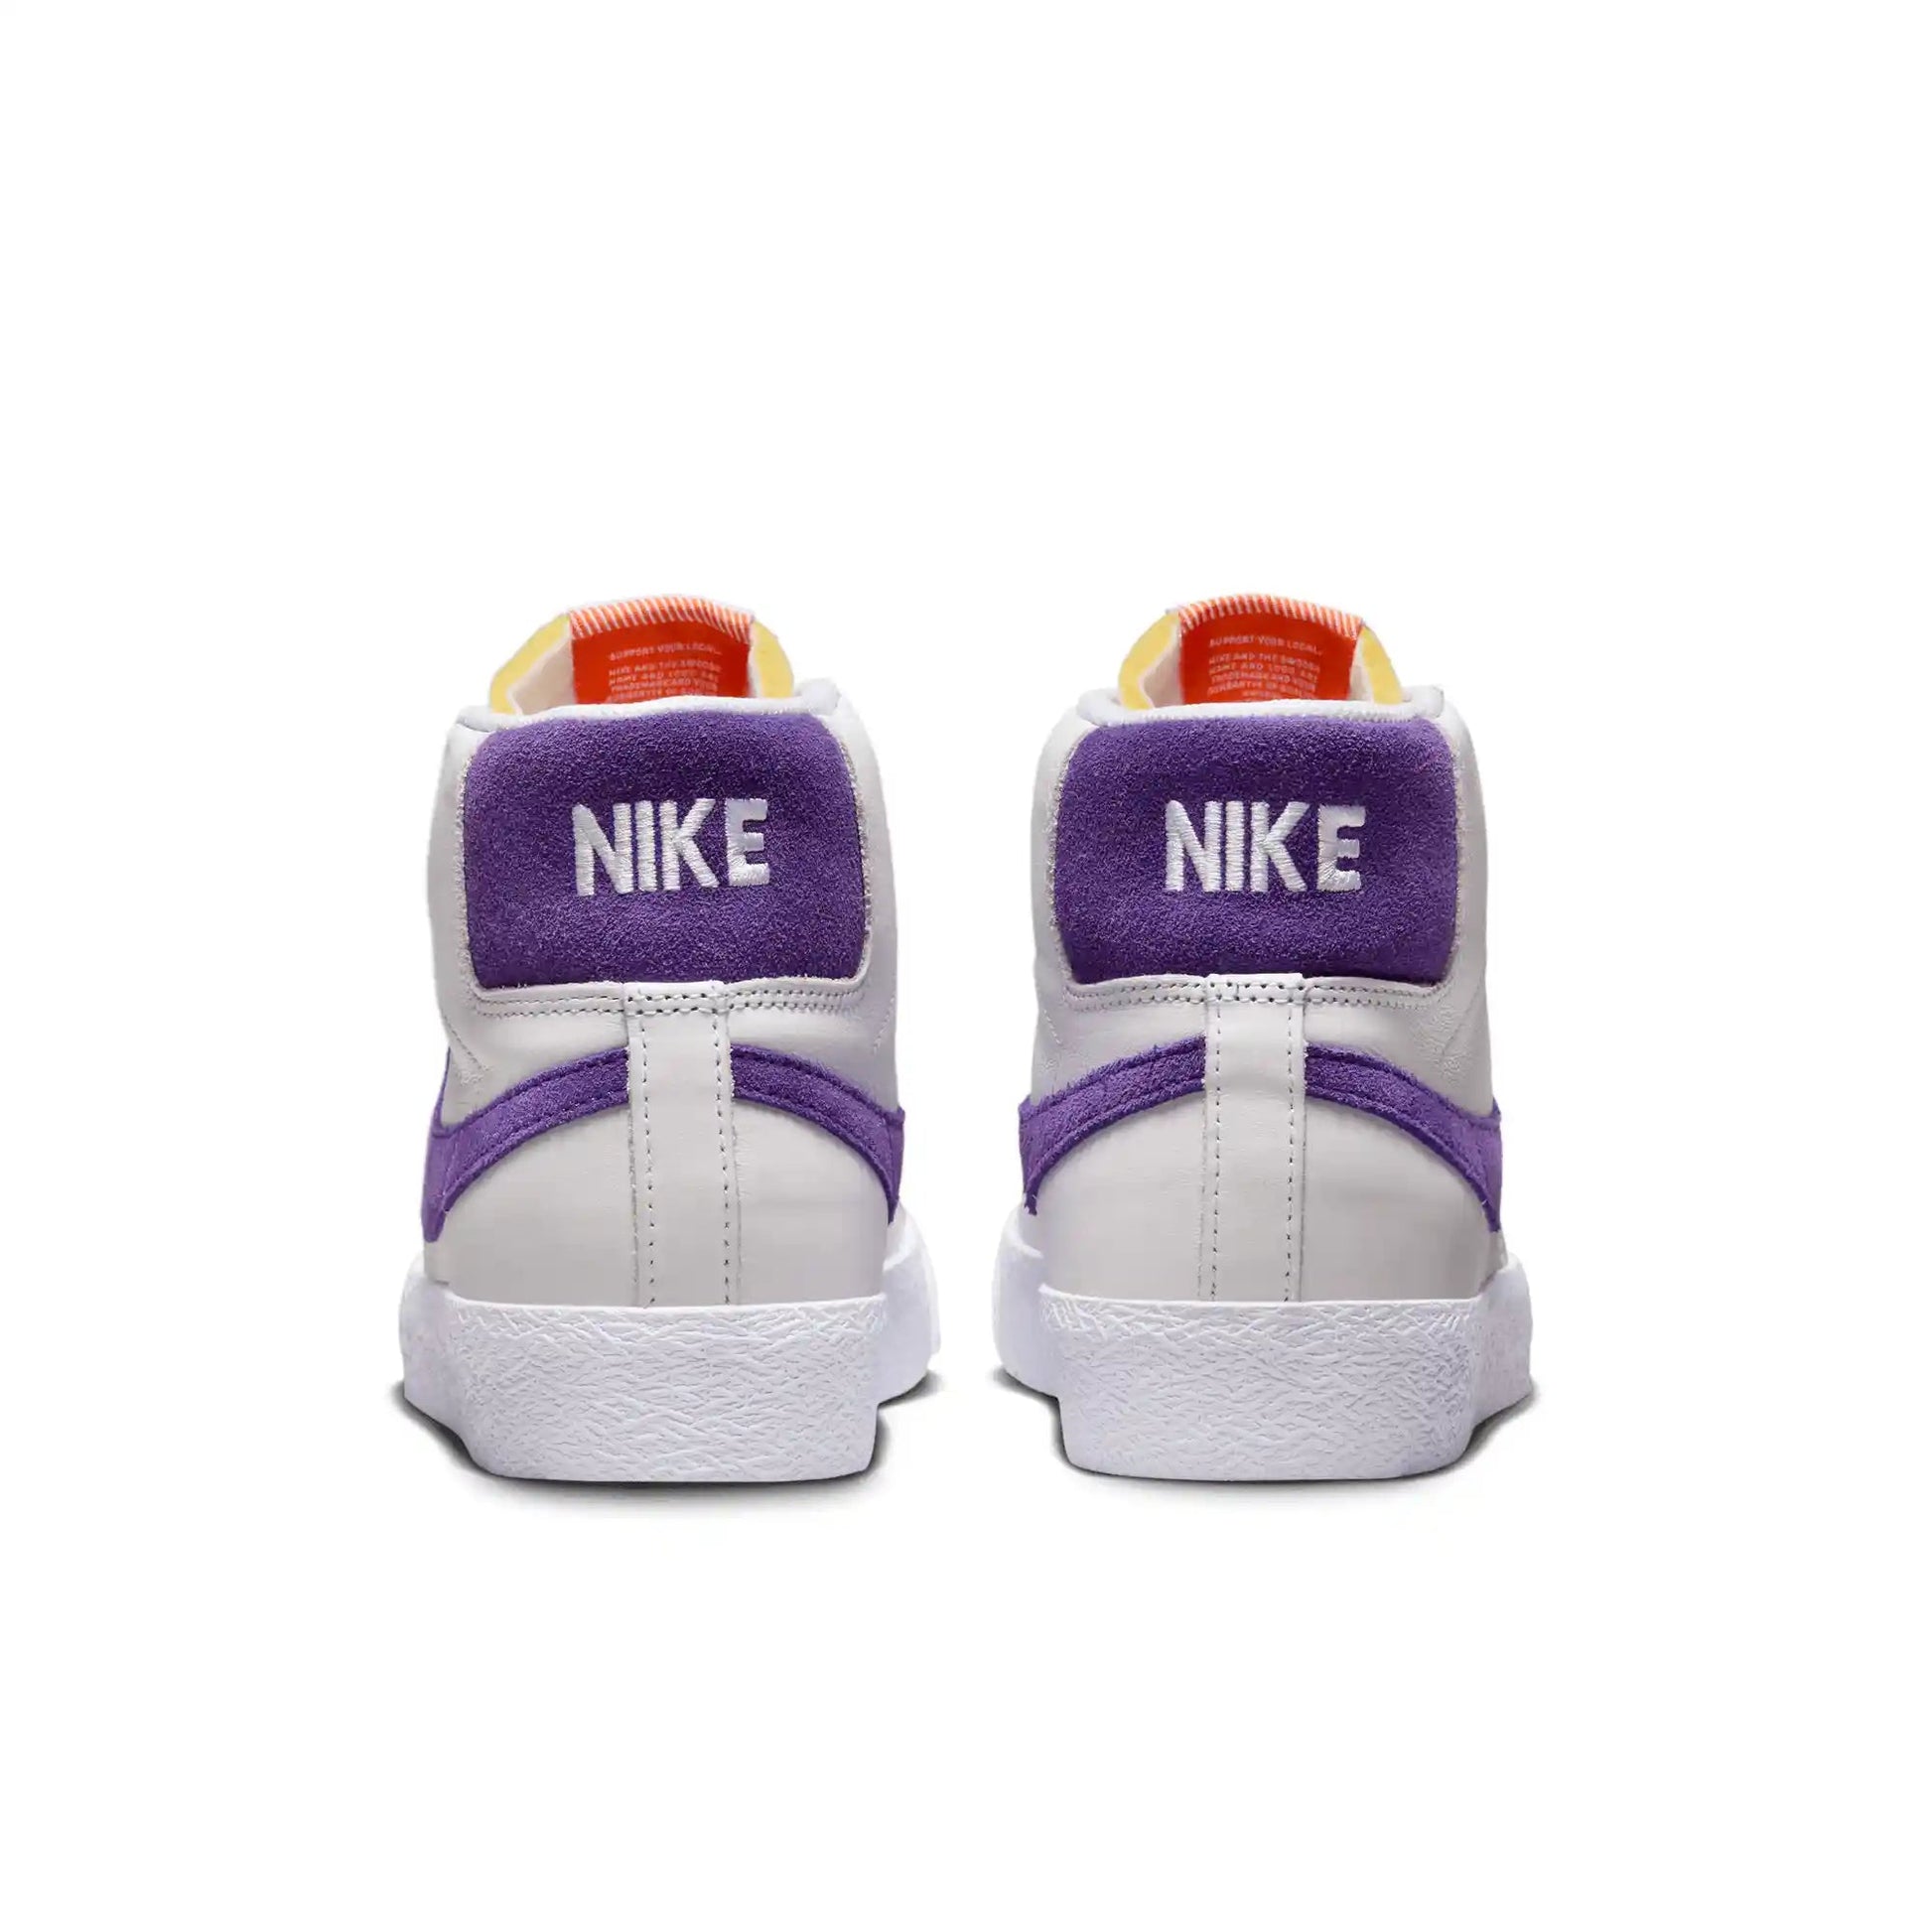 Nike SB Zoom Blazer Mid, white/court purple-white-gum light brown - Tiki Room Skateboards - 3